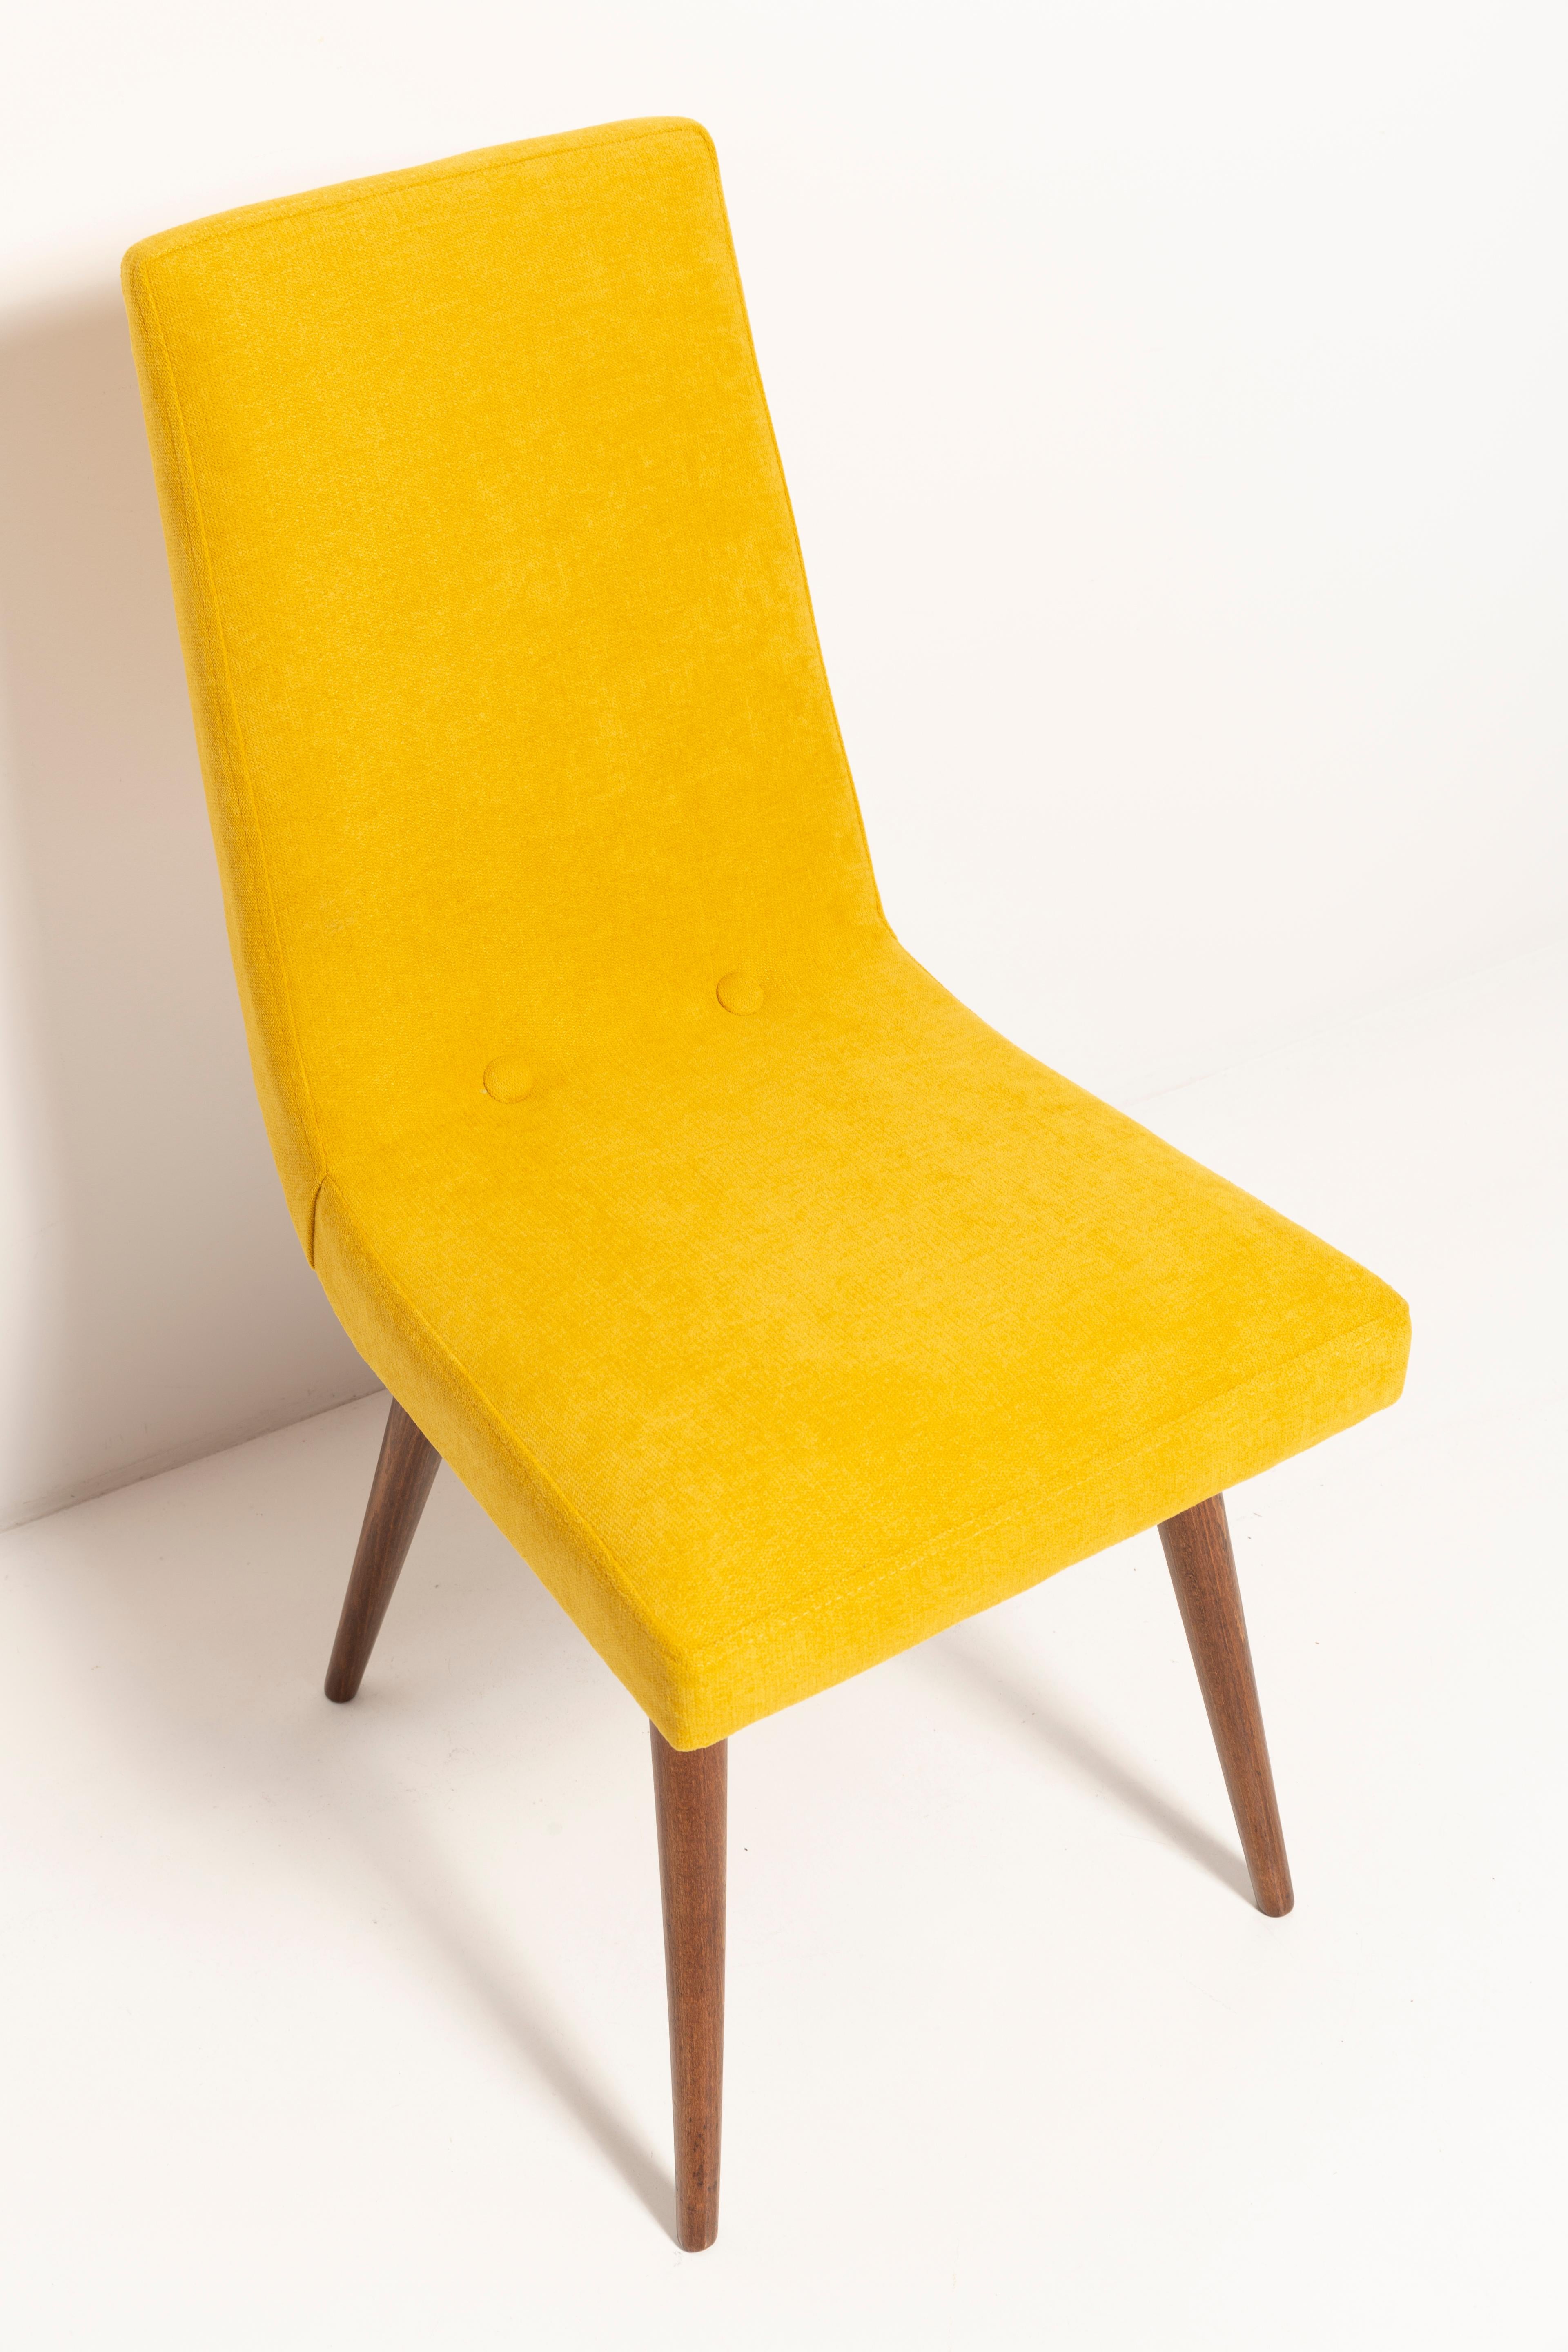 Six 20th Century Mustard Yellow Wool Chair, Rajmund Halas Europe, 1960s For Sale 4